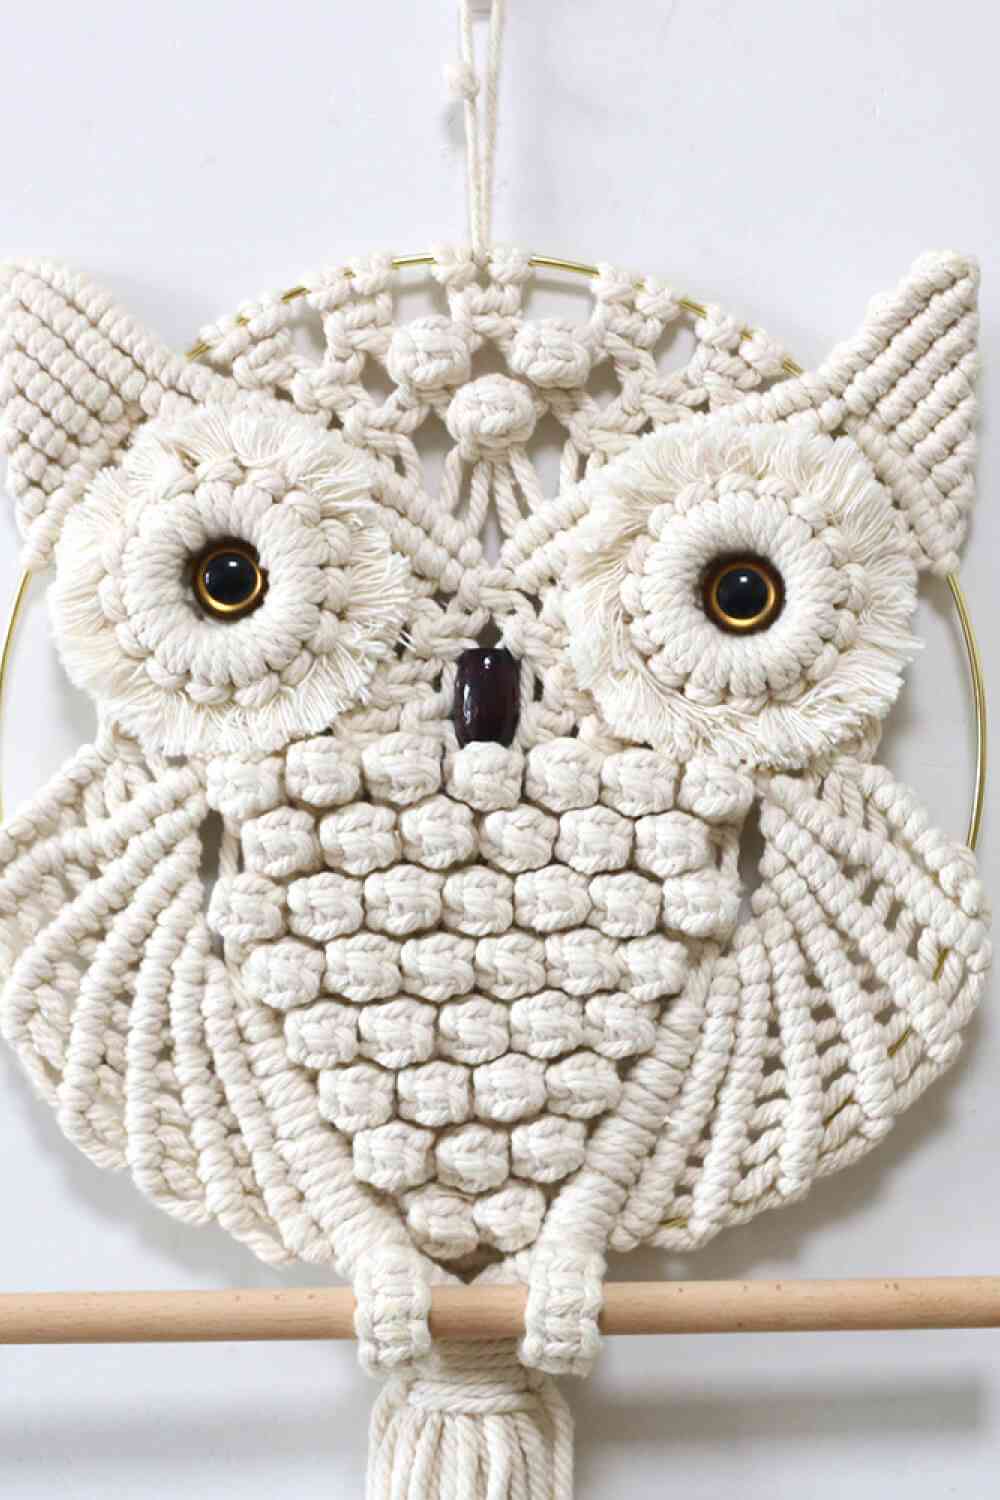 Hand-Woven Owl Macrame Wall Hanging - BloomBliss.com